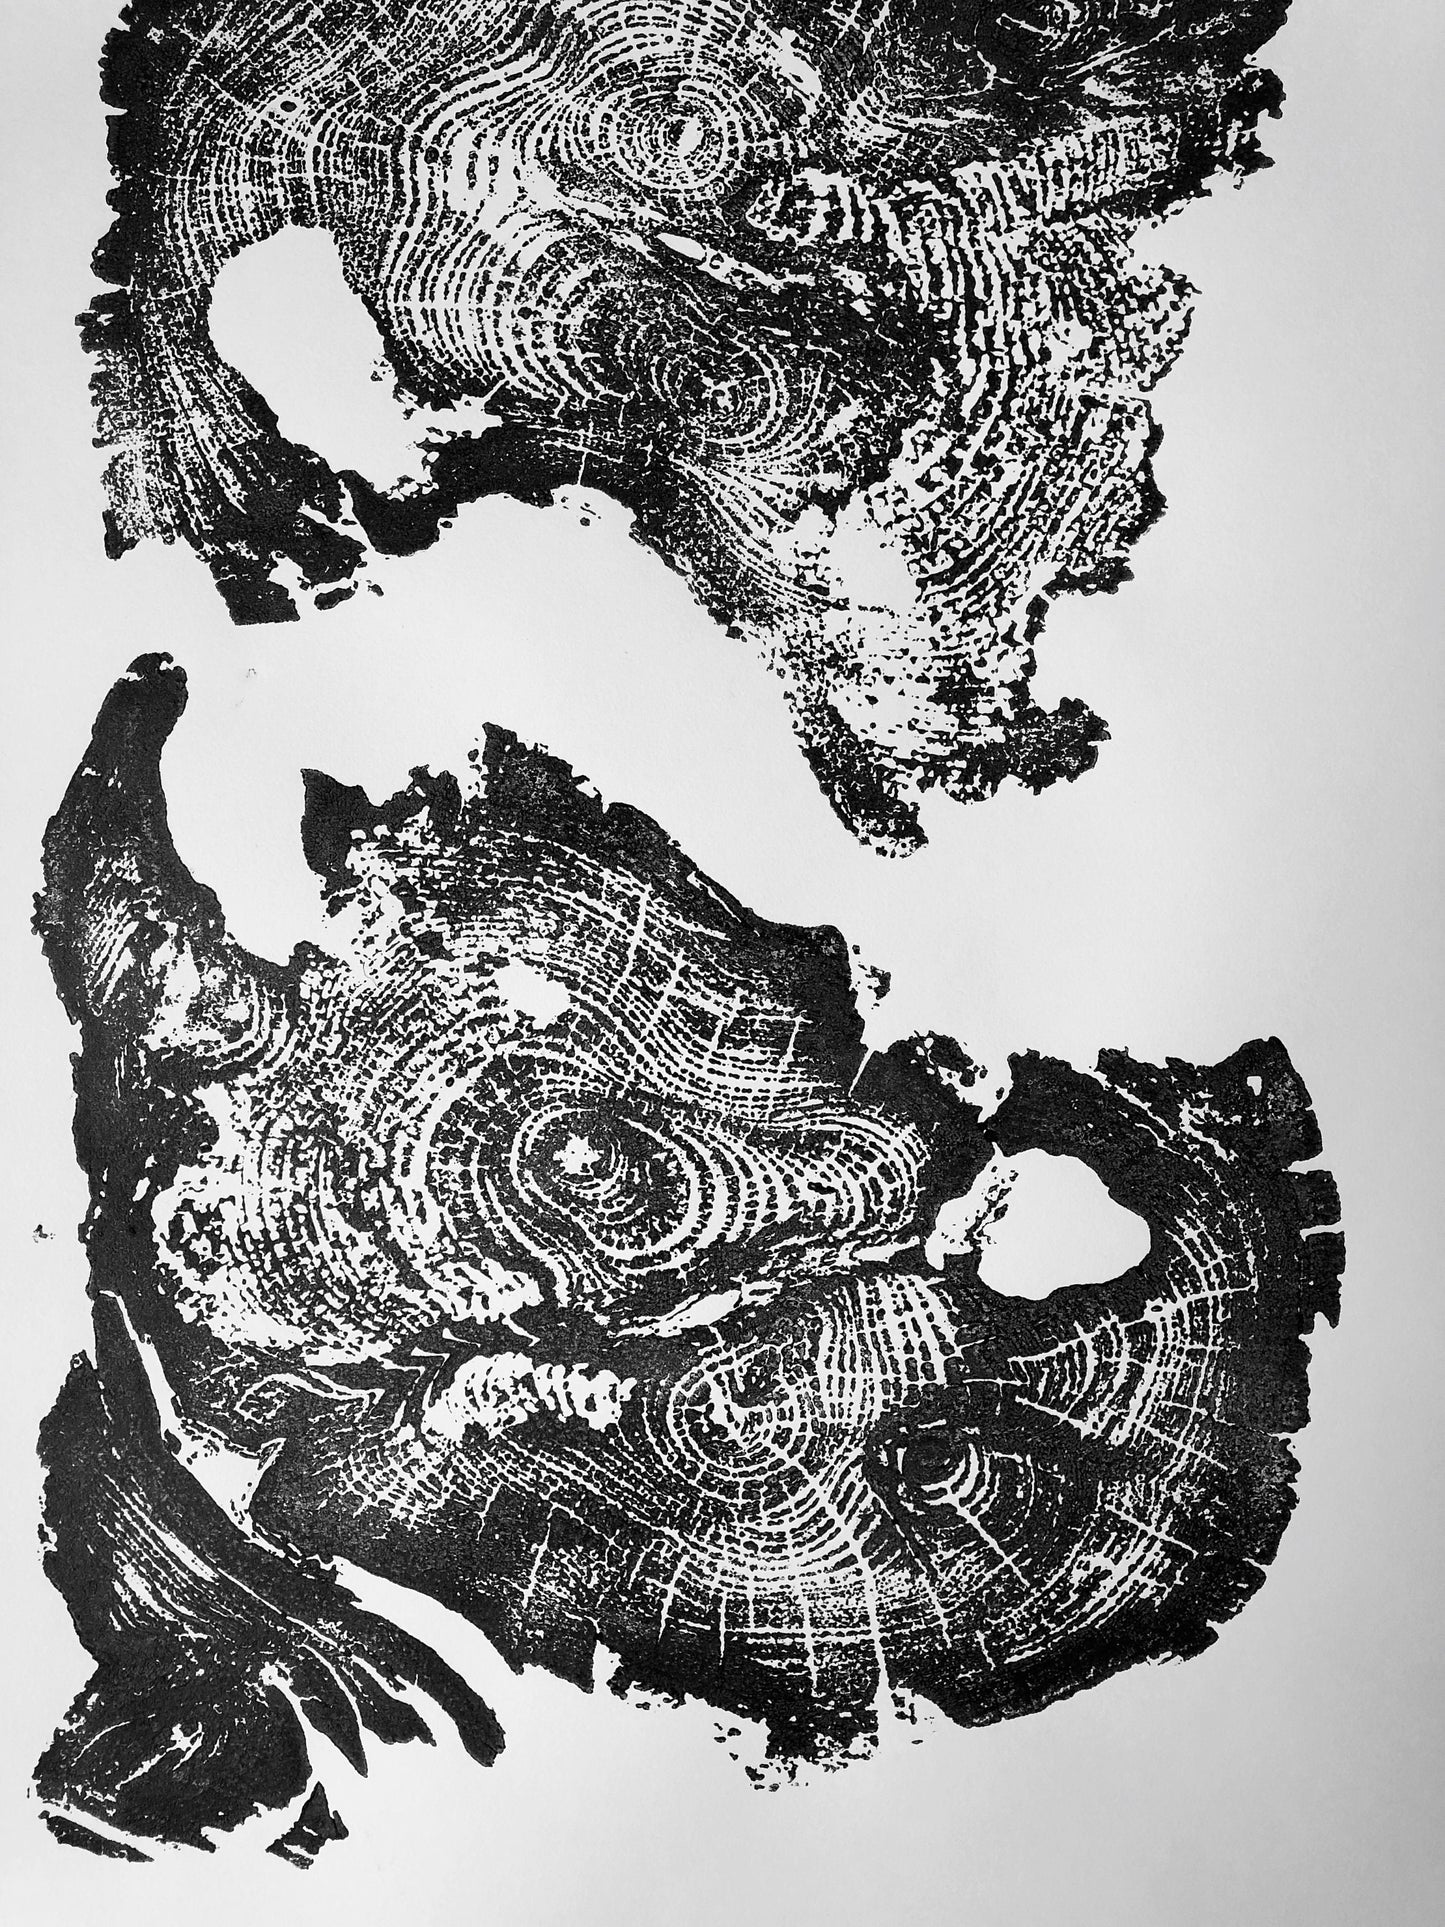 Lake Superior, Michigan Driftwood - 18x24 print